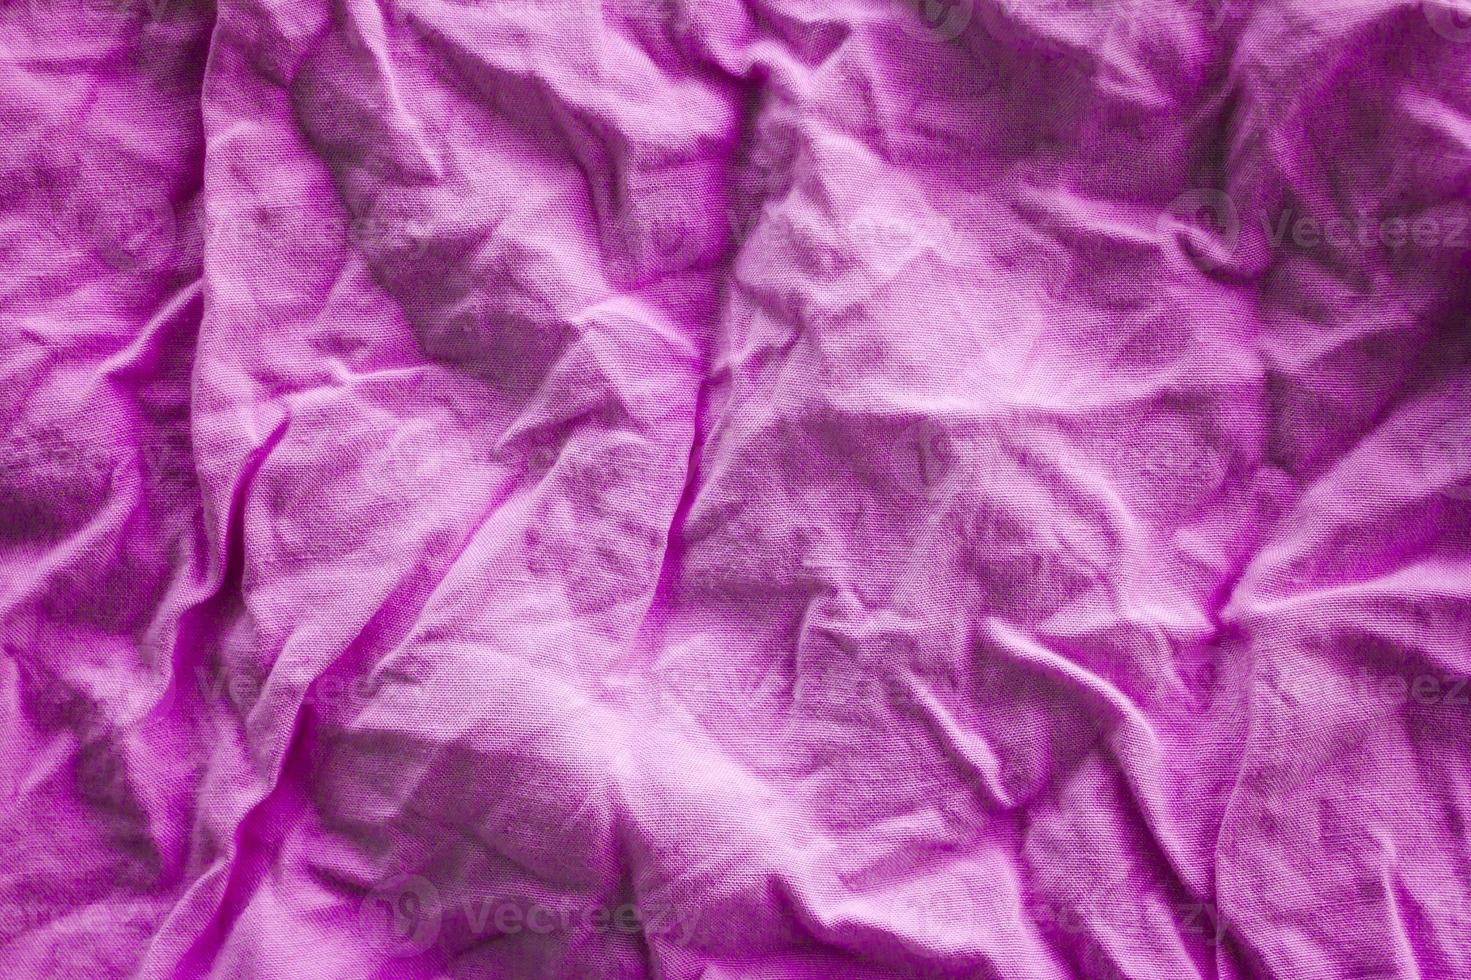 Crumpled fabric texture 8508098 Stock Photo at Vecteezy